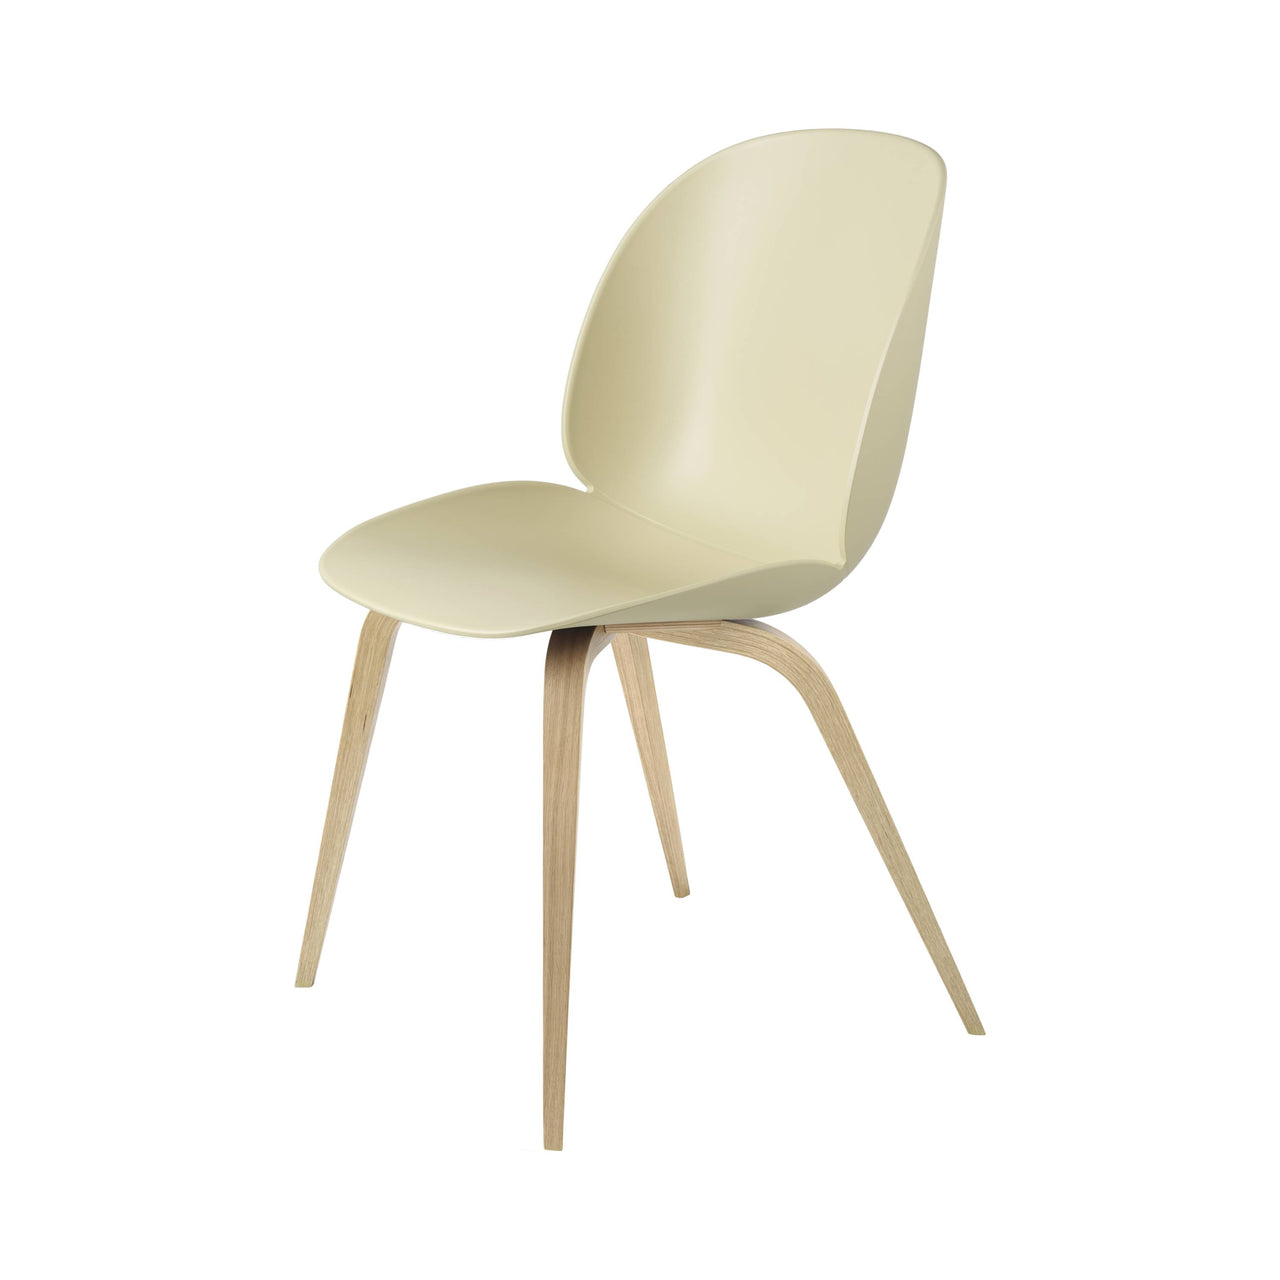 Beetle Dining Chair: Wood Base + Pastel Green + Oak + Plastic Glides